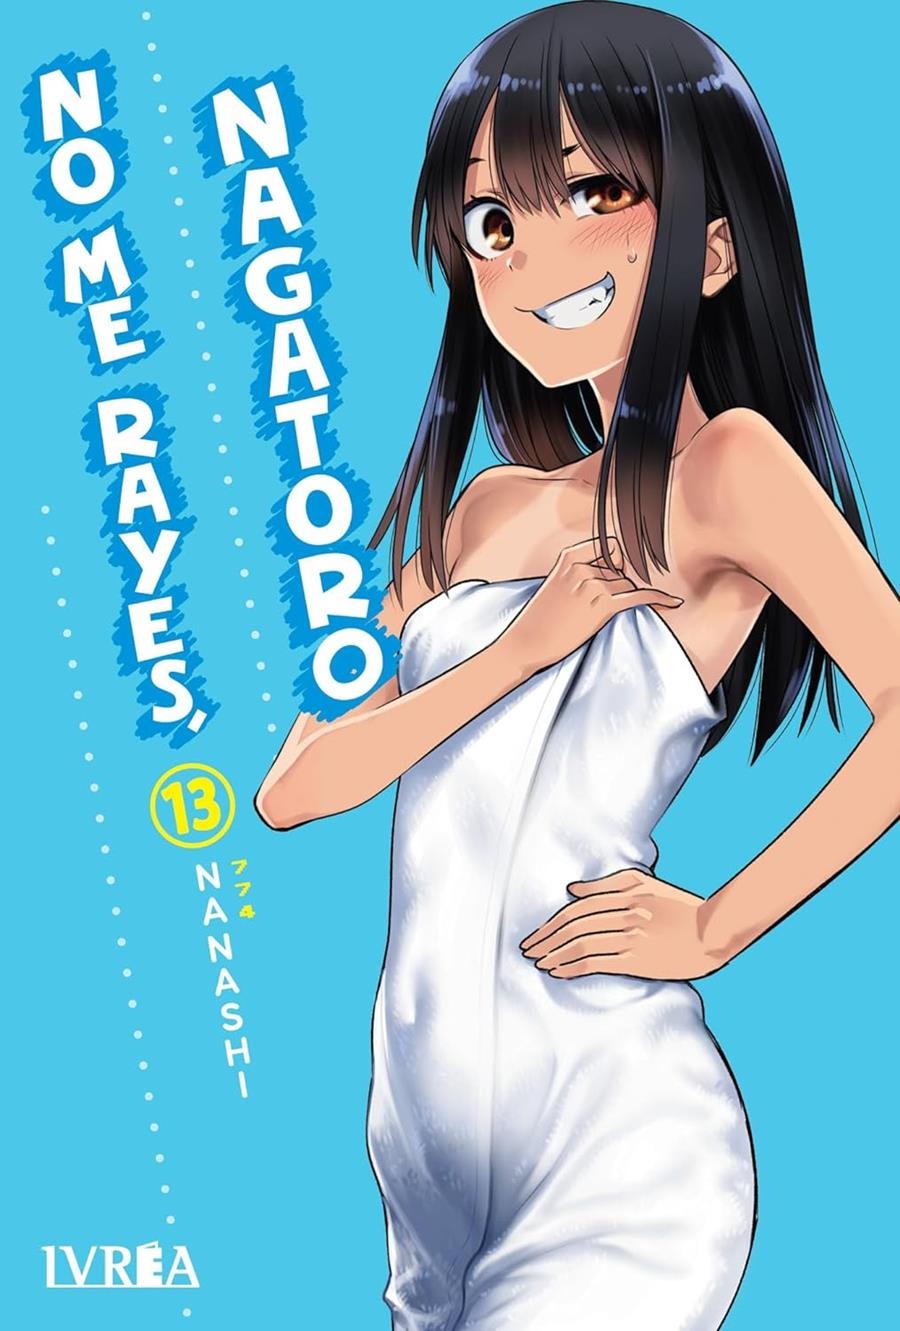 NO ME RAYES, NAGATORO Nº13 [RUSTICA] | NANASHI | Akira Comics  - libreria donde comprar comics, juegos y libros online